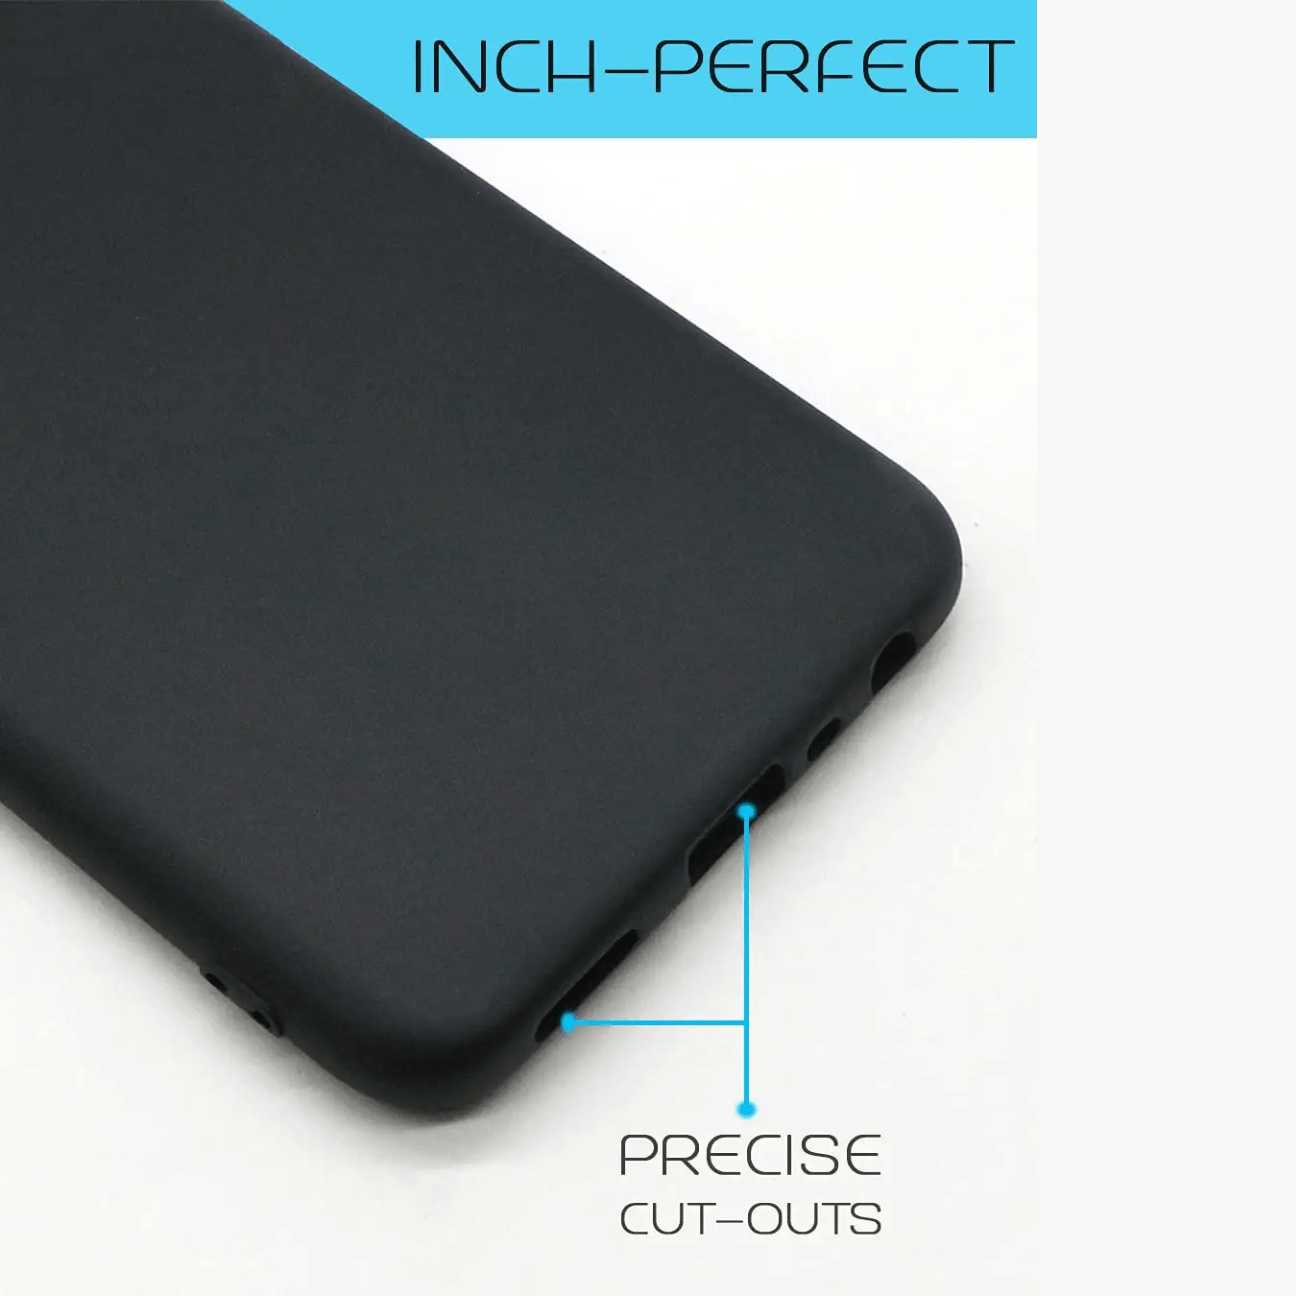 Xiaomi Redmi K20 Black Soft Silicone Phone Case